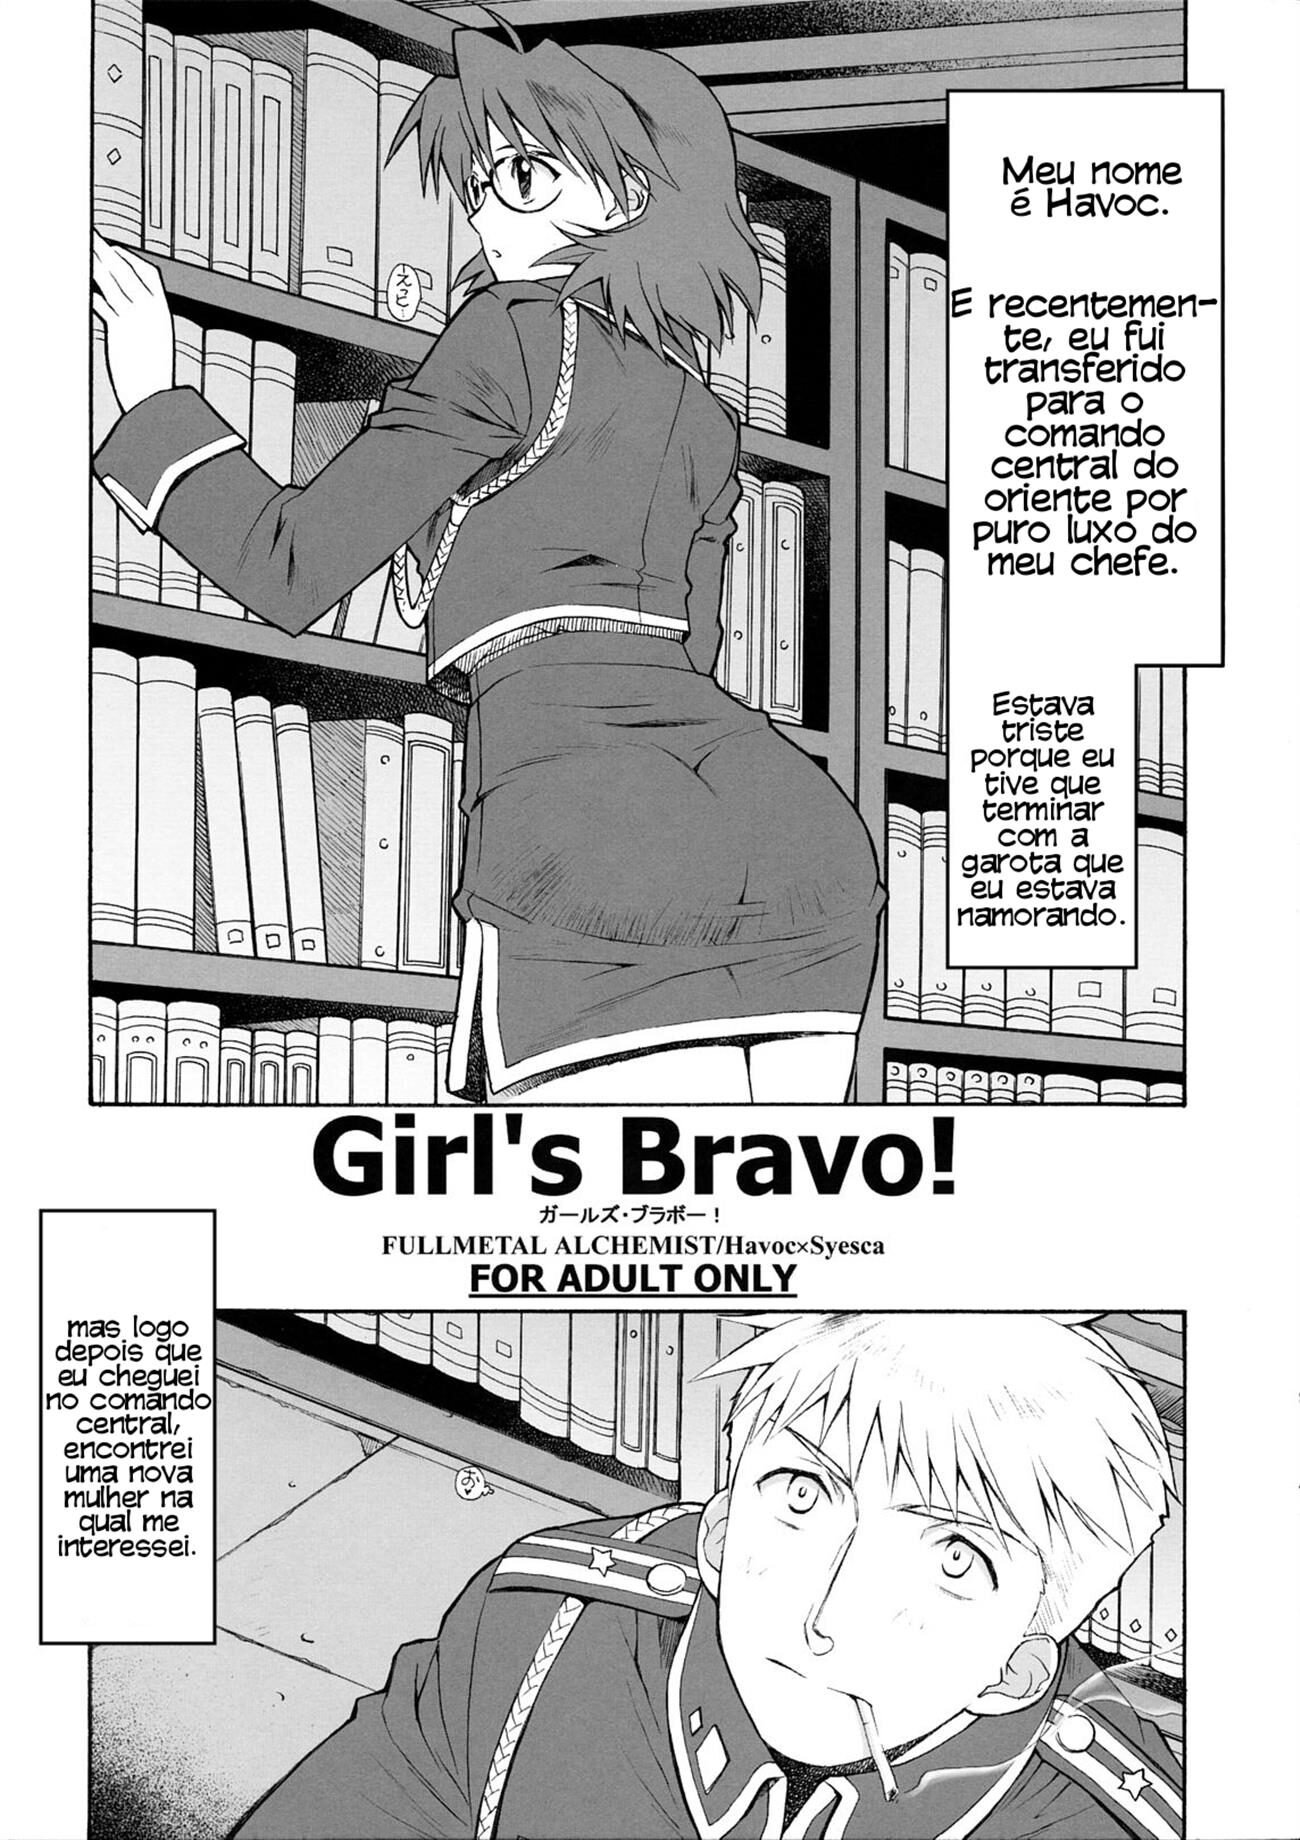 [Yuuki Mitsuru] Girl's Bravo! (Fullmetal Alchemist) - Foto 1